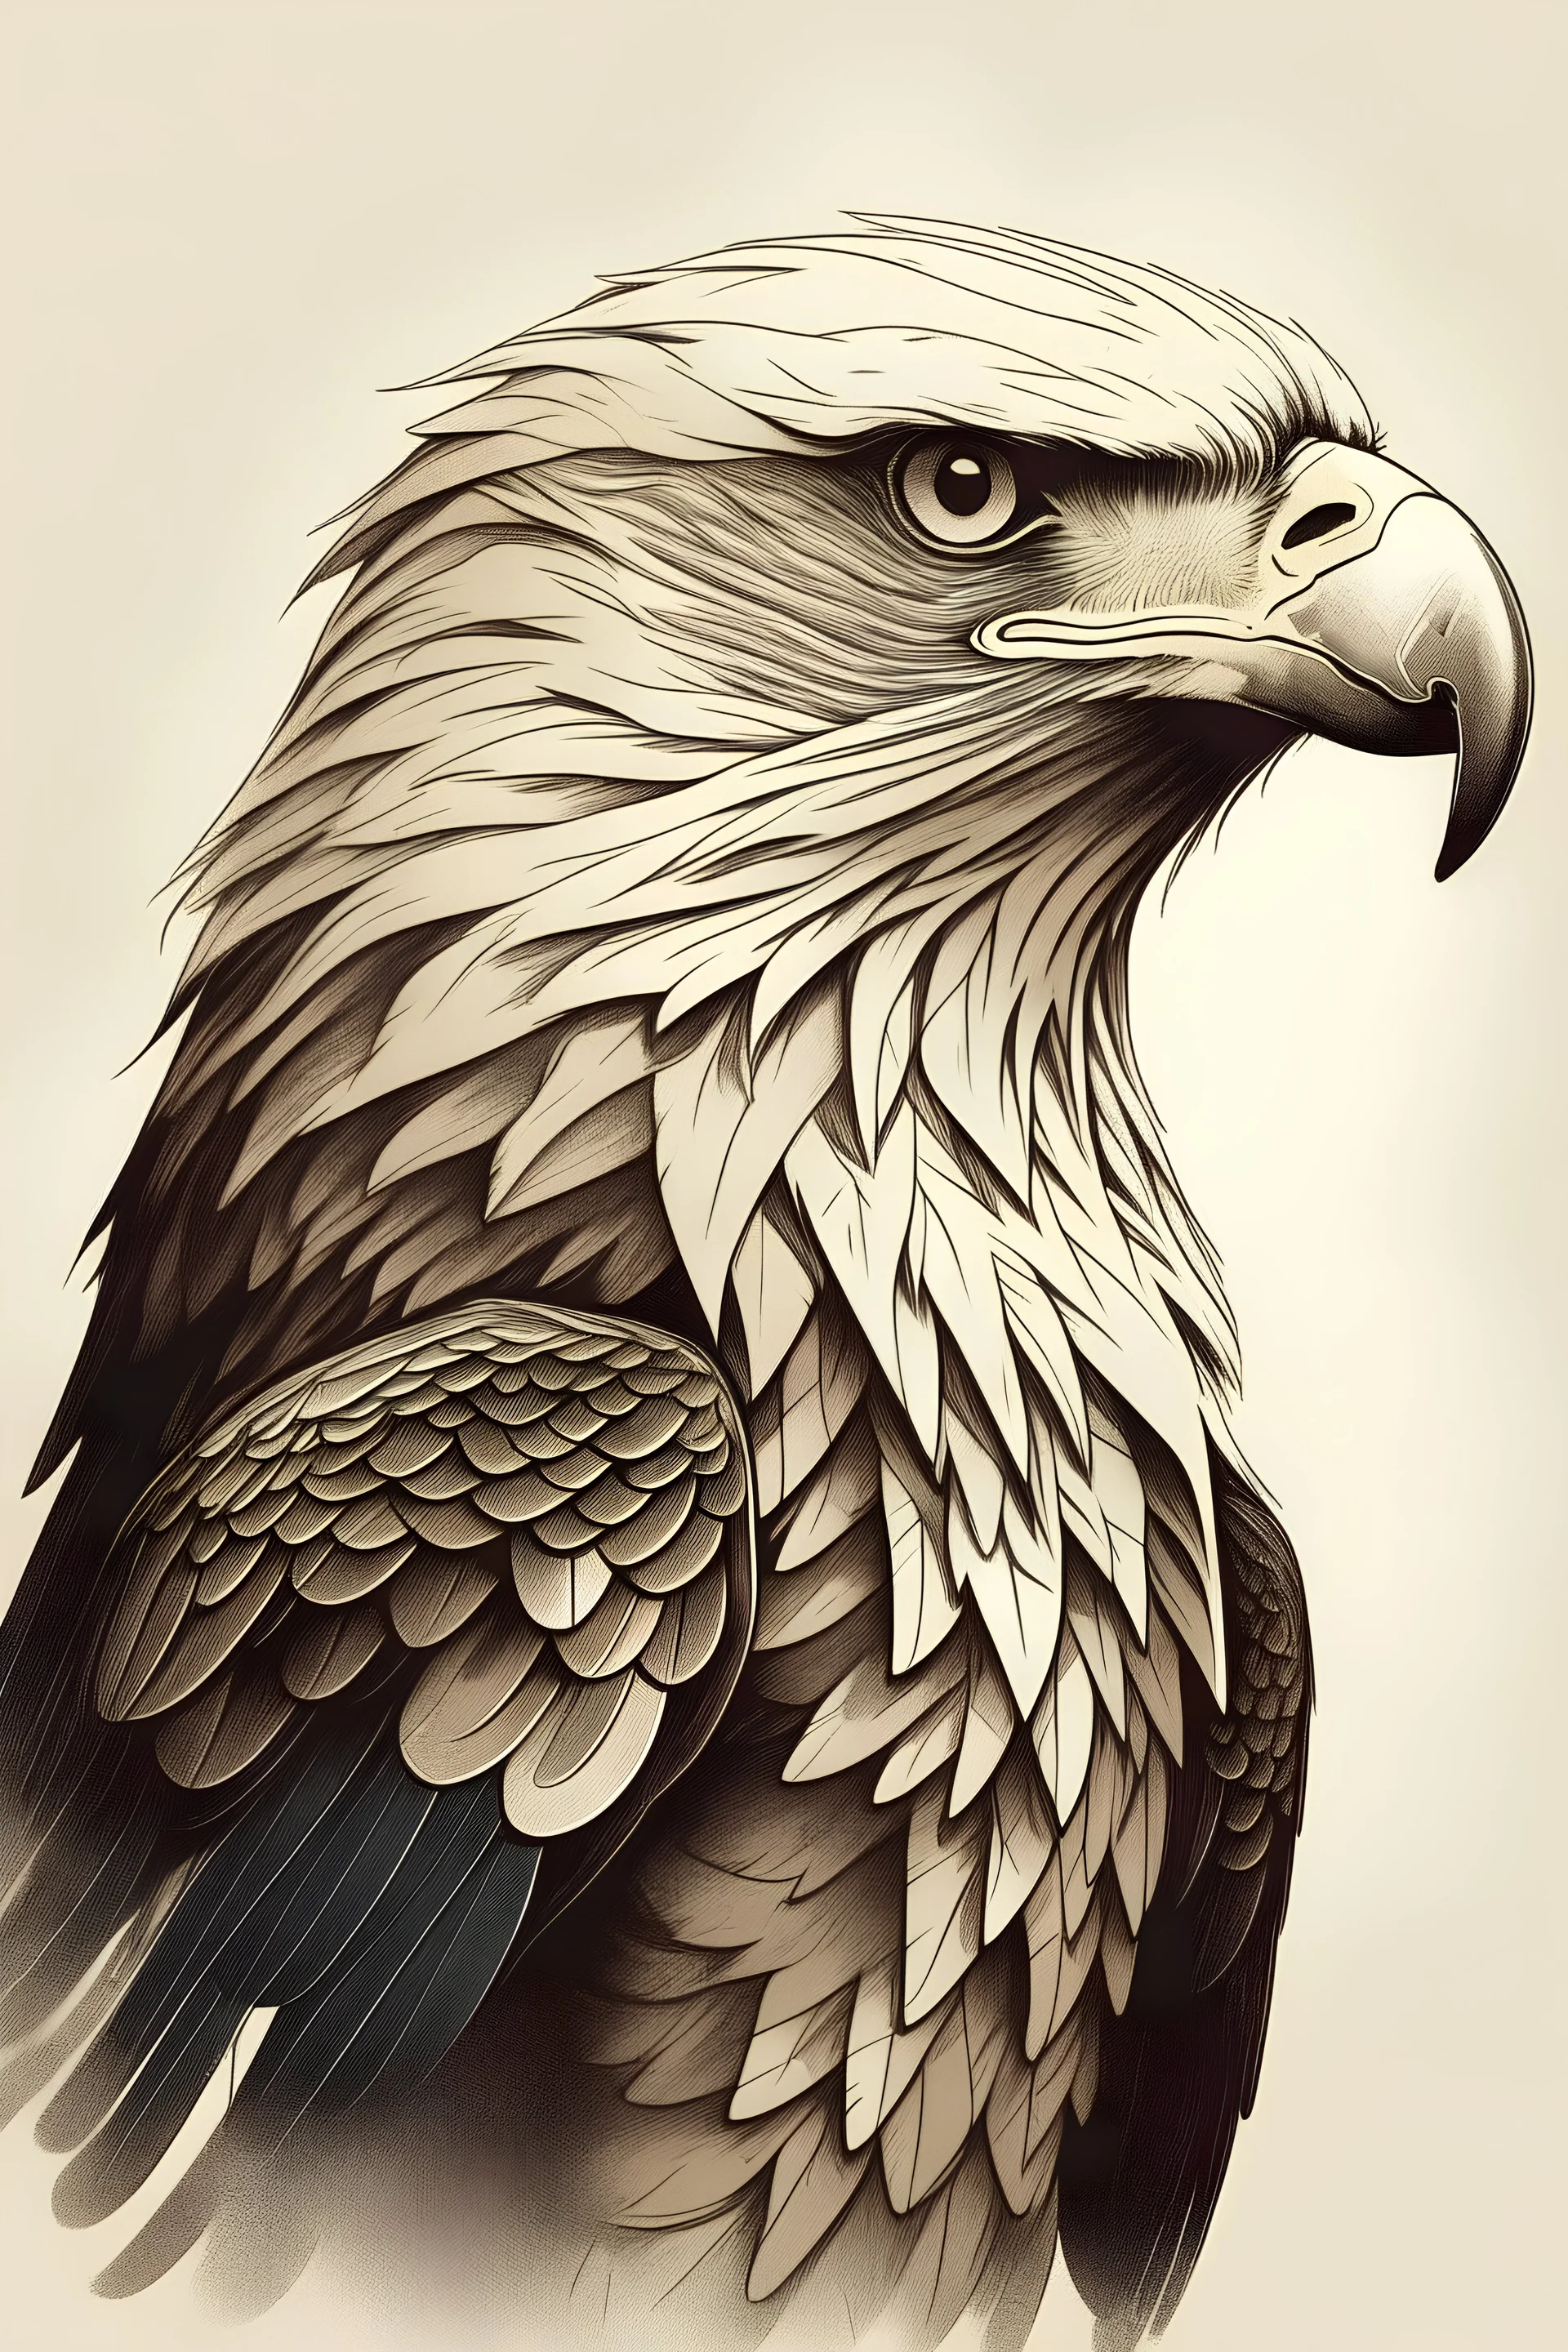 i need a eagle illustration ,clear and simple illustration and simple details